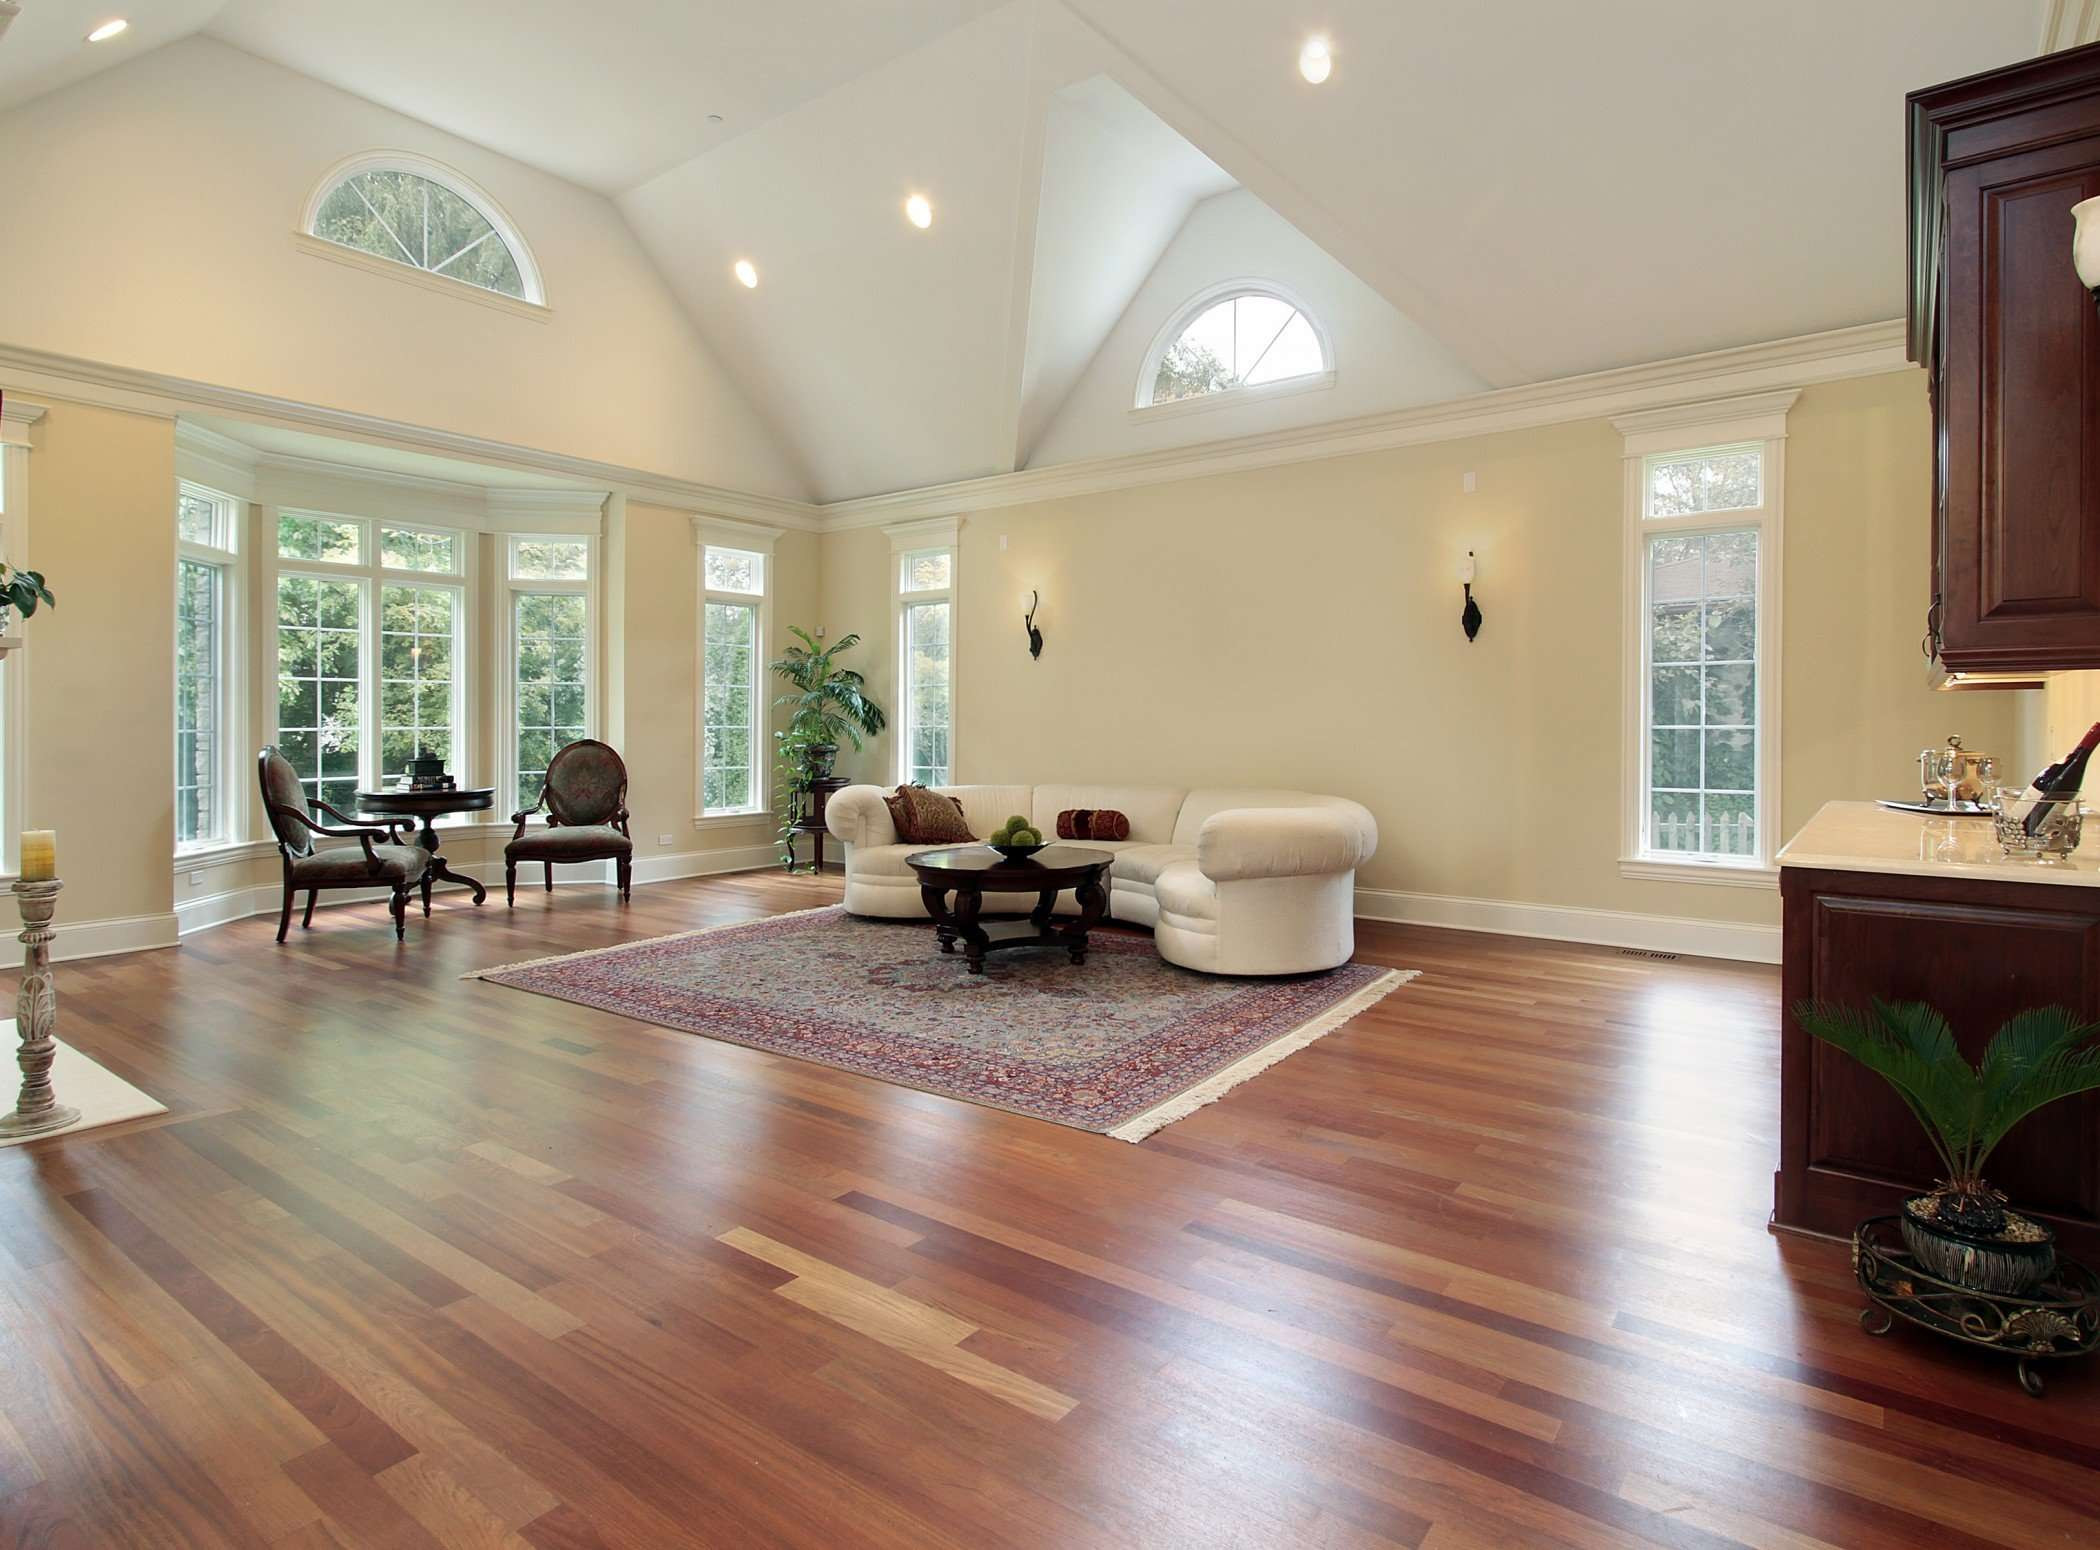 hardwood timber flooring brisbane of wood floor price lists a1 wood floors throughout perths largest range of wood floors